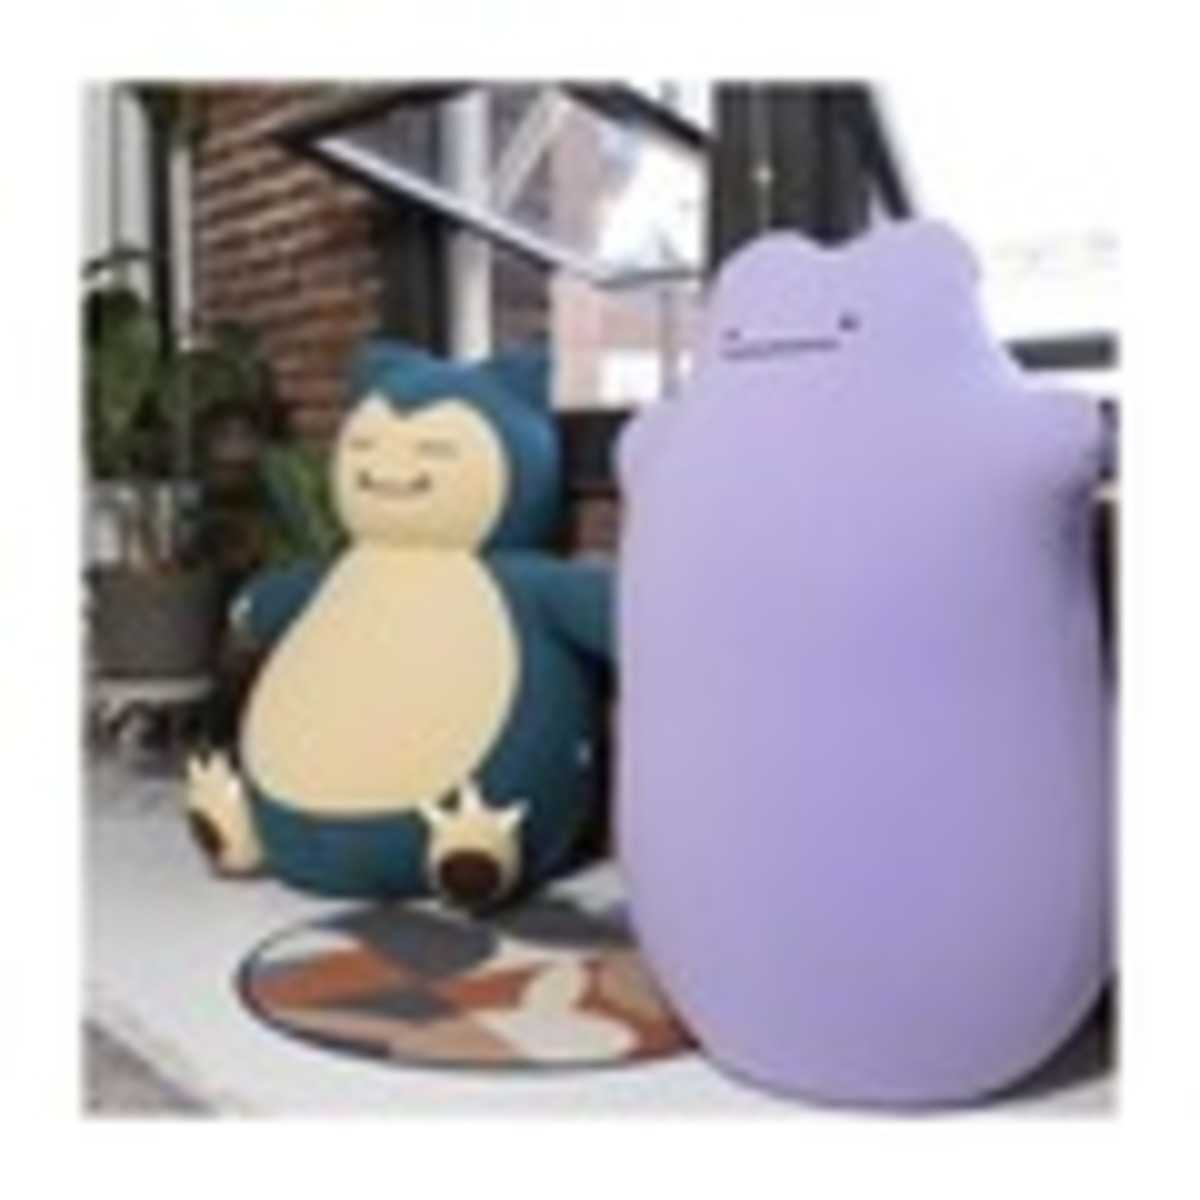 Pokémon Home Accents Bean Bag Chair by Yogibo